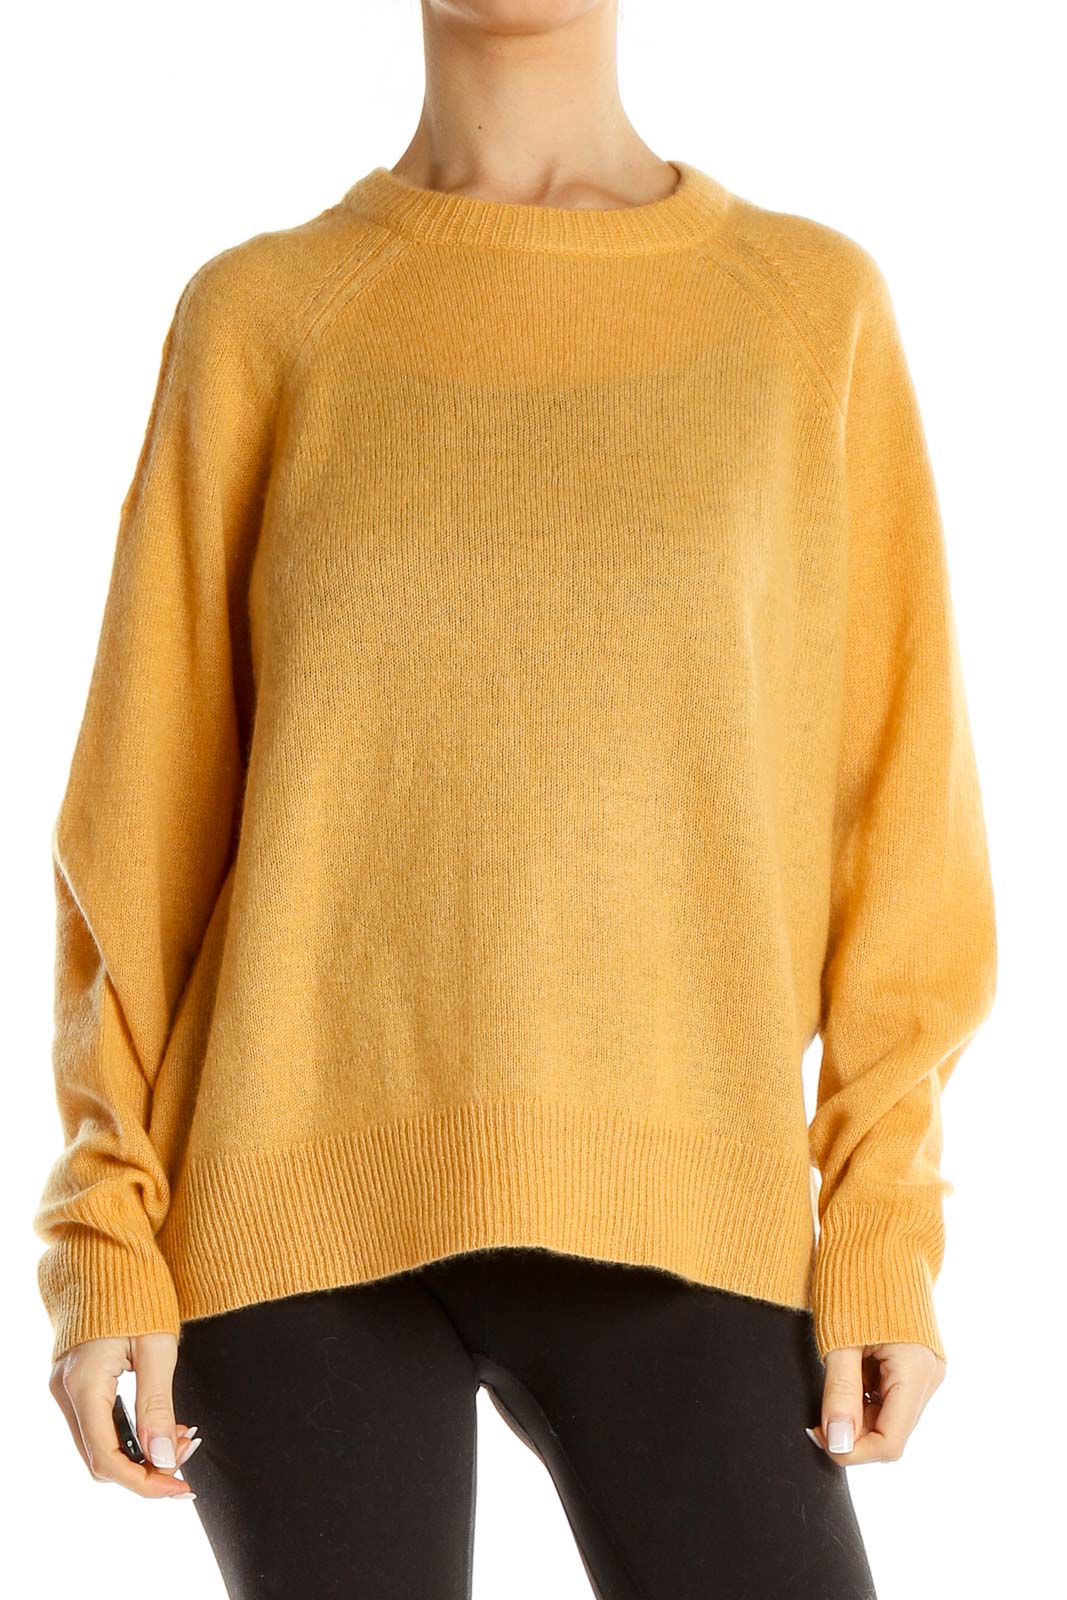 Orange Chic Sweater Front